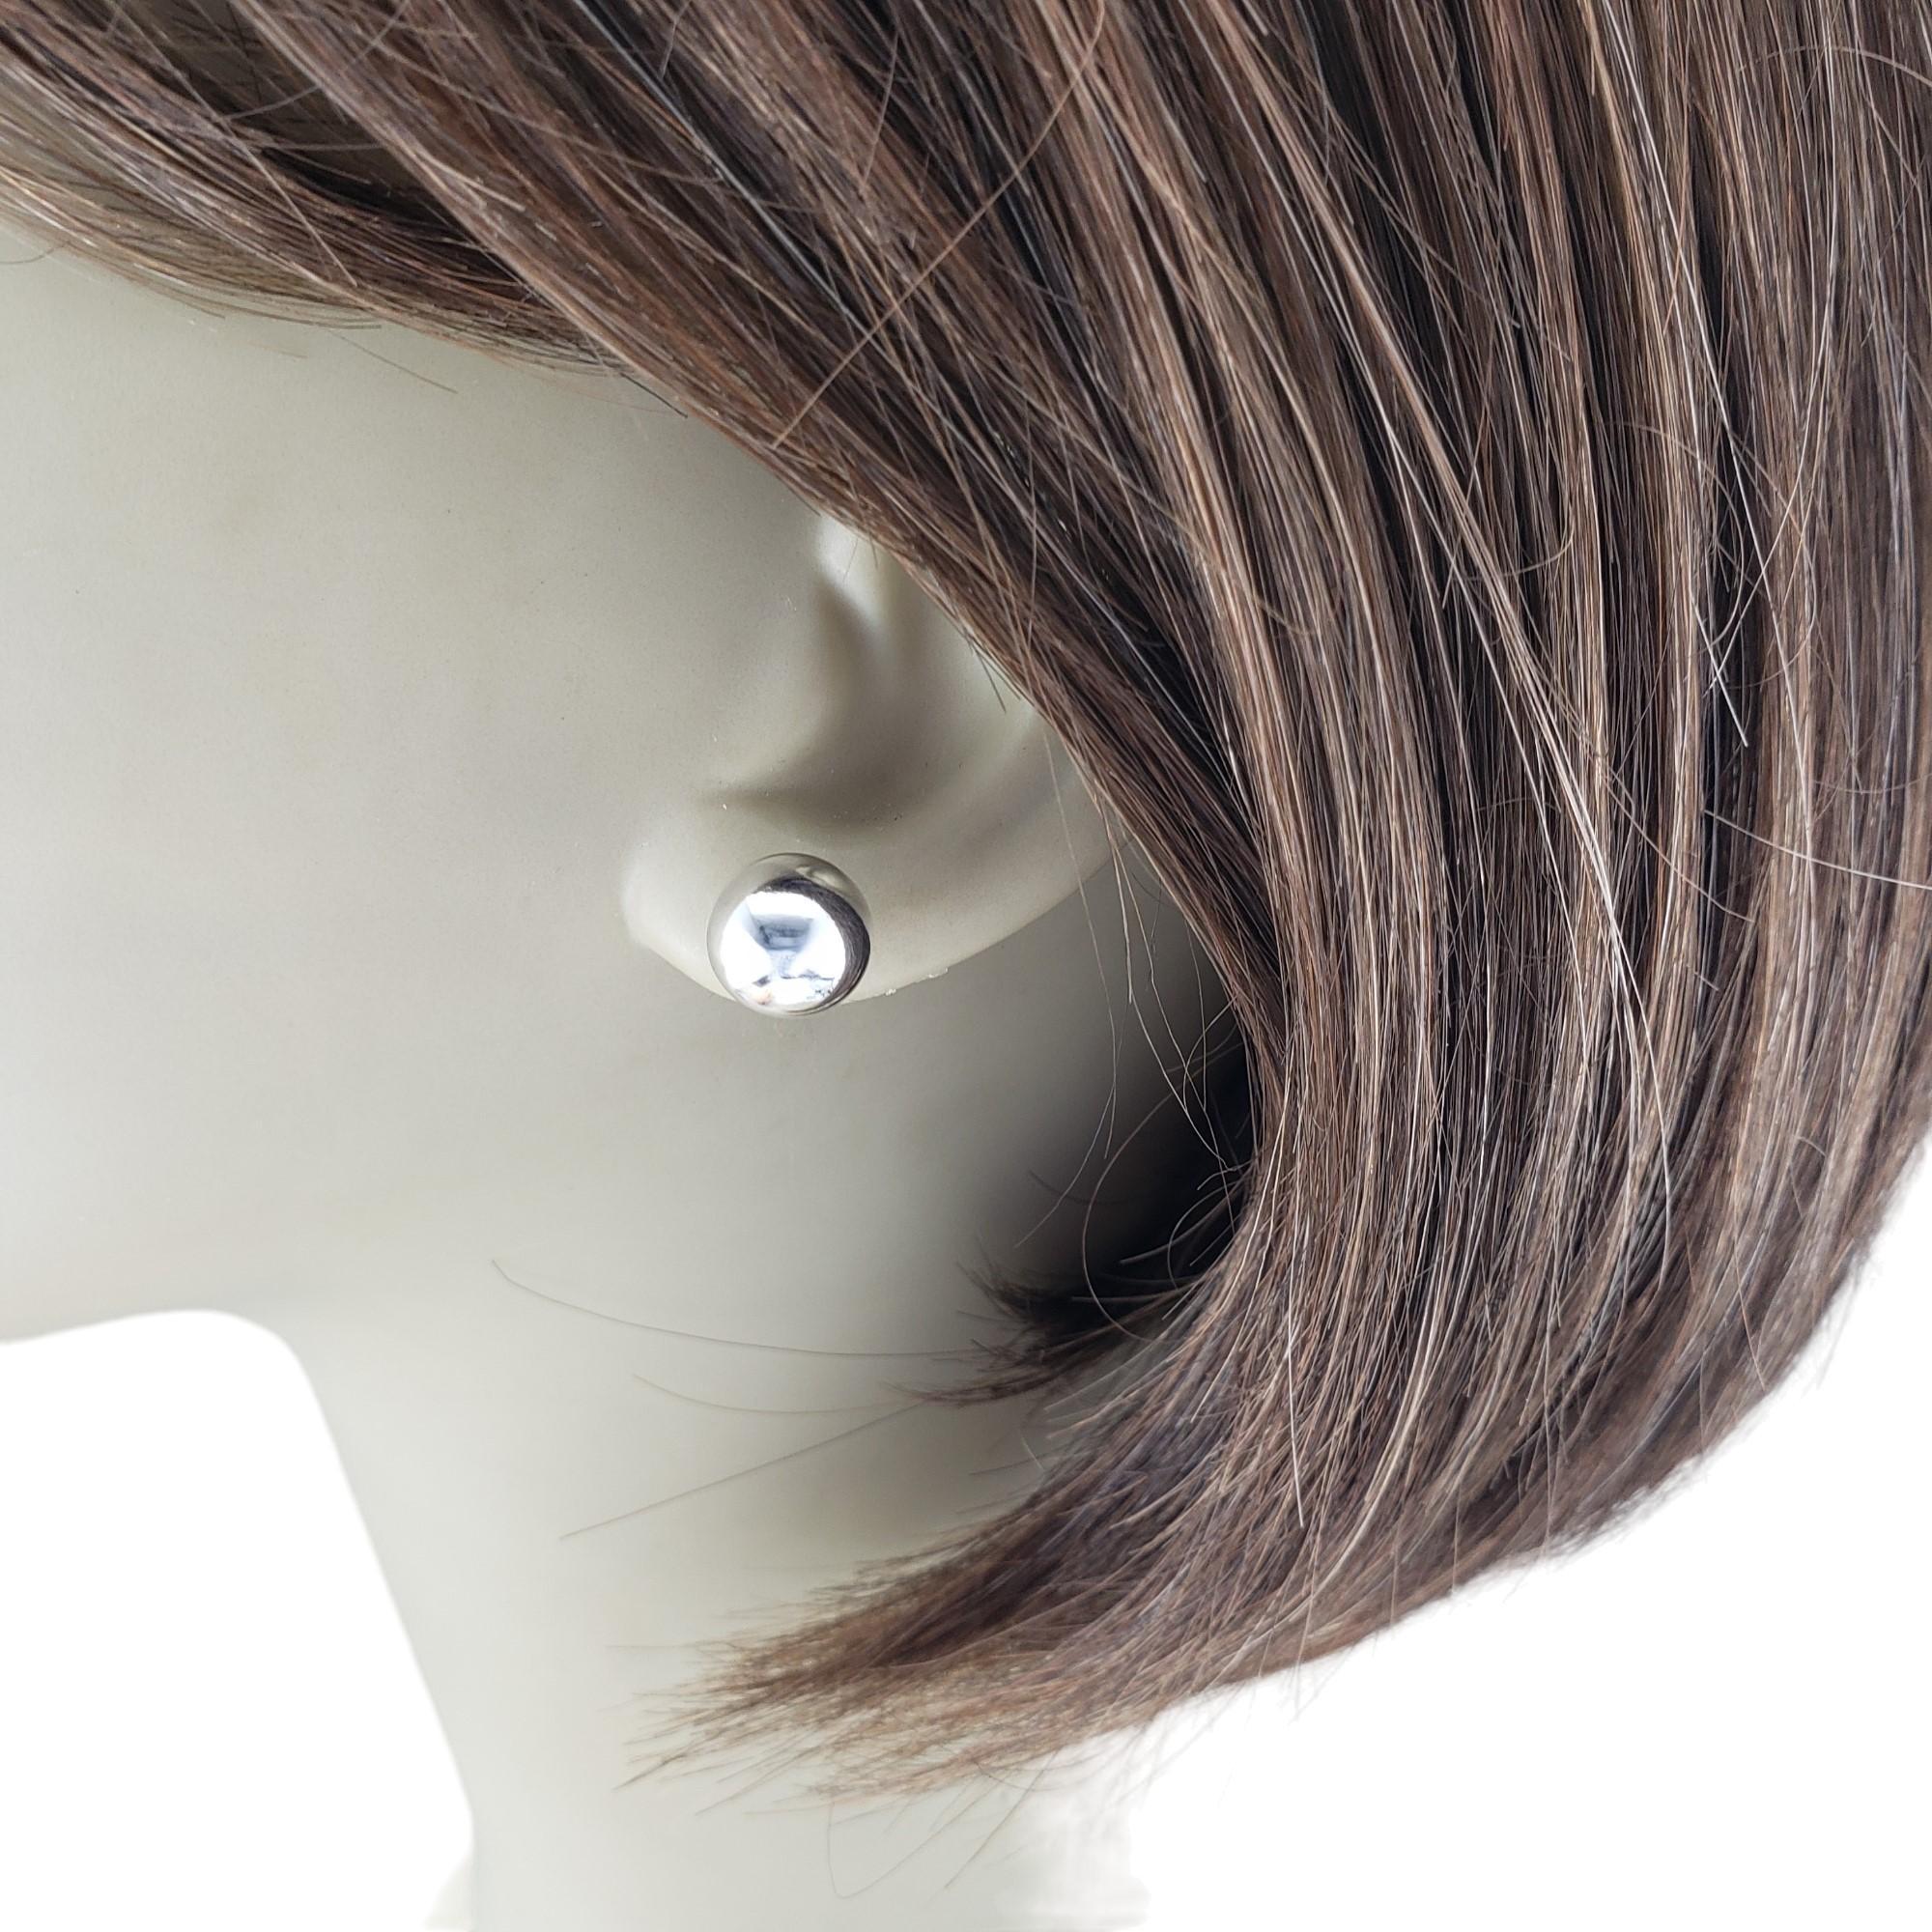 Tiffany & Co. Sterling Silver Ball 10mm Earrings #17163 For Sale 3